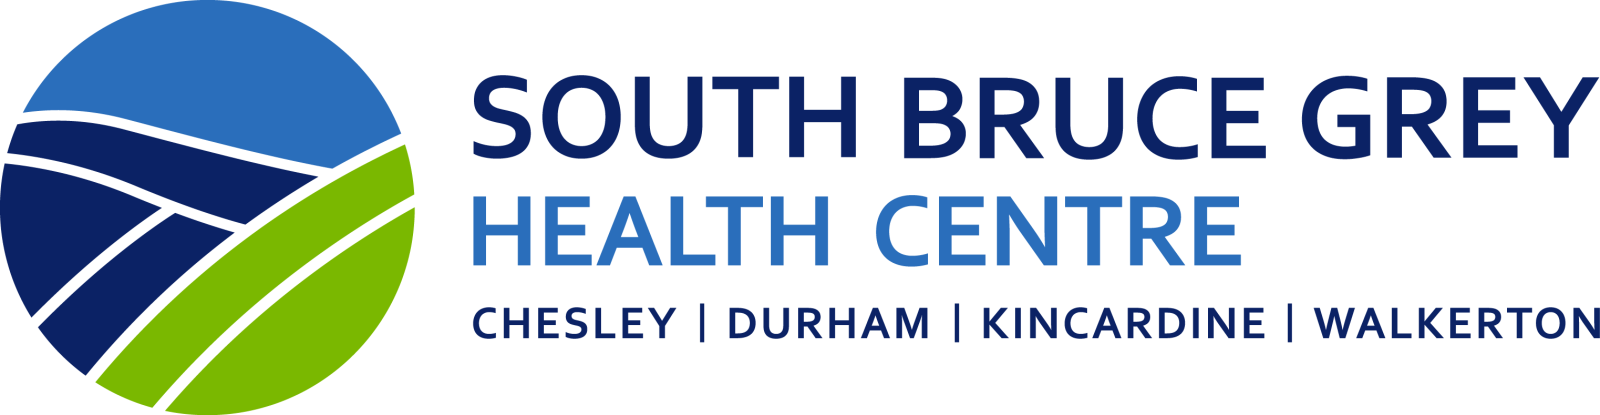 South Bruce Grey Health Centre